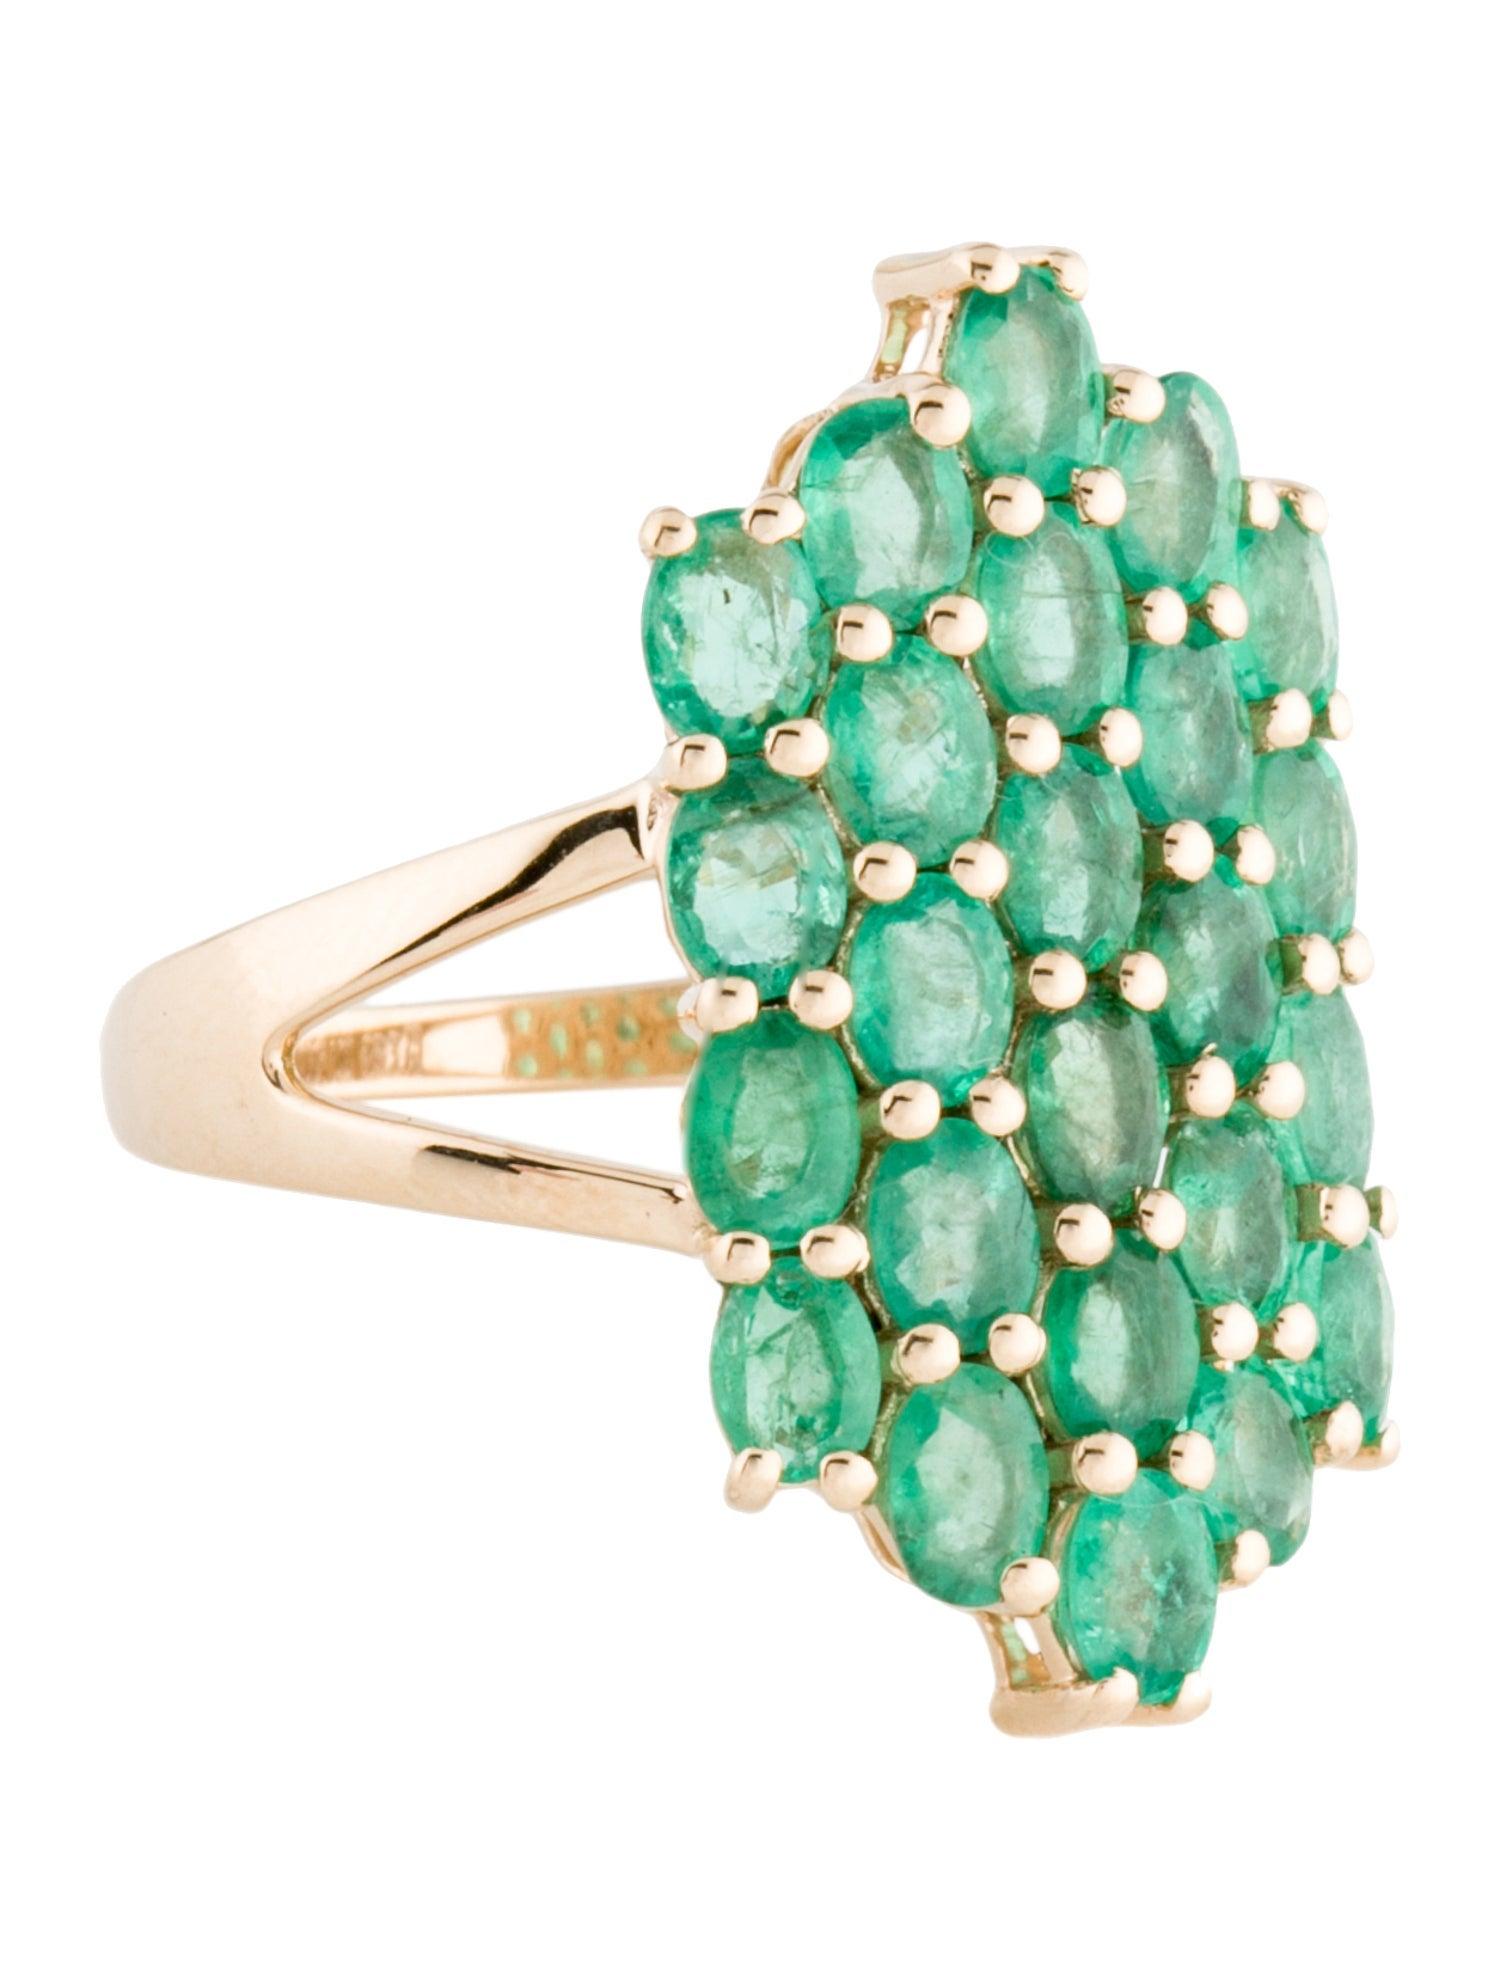 Brilliant Cut Gorgeous 14K Emerald Cocktail Ring - 2.59ctw Gemstones - Size 6.75 Vintage Ring For Sale